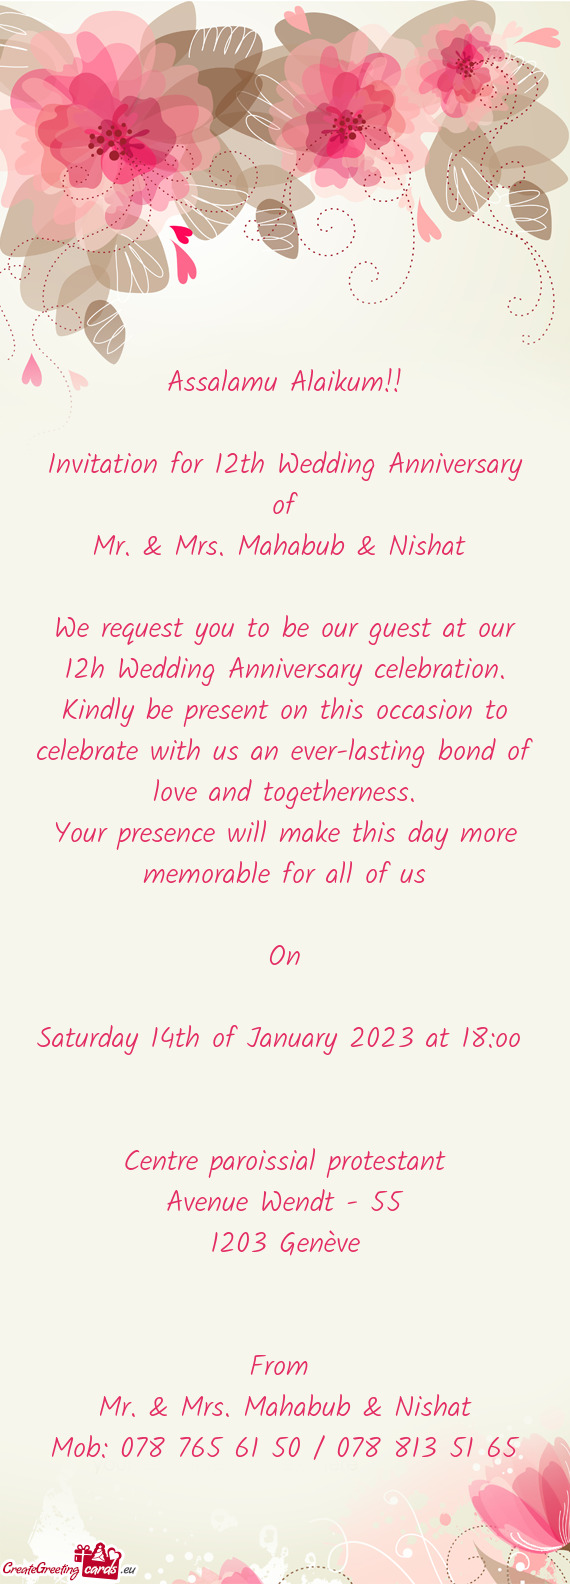 Mr. & Mrs. Mahabub & Nishat